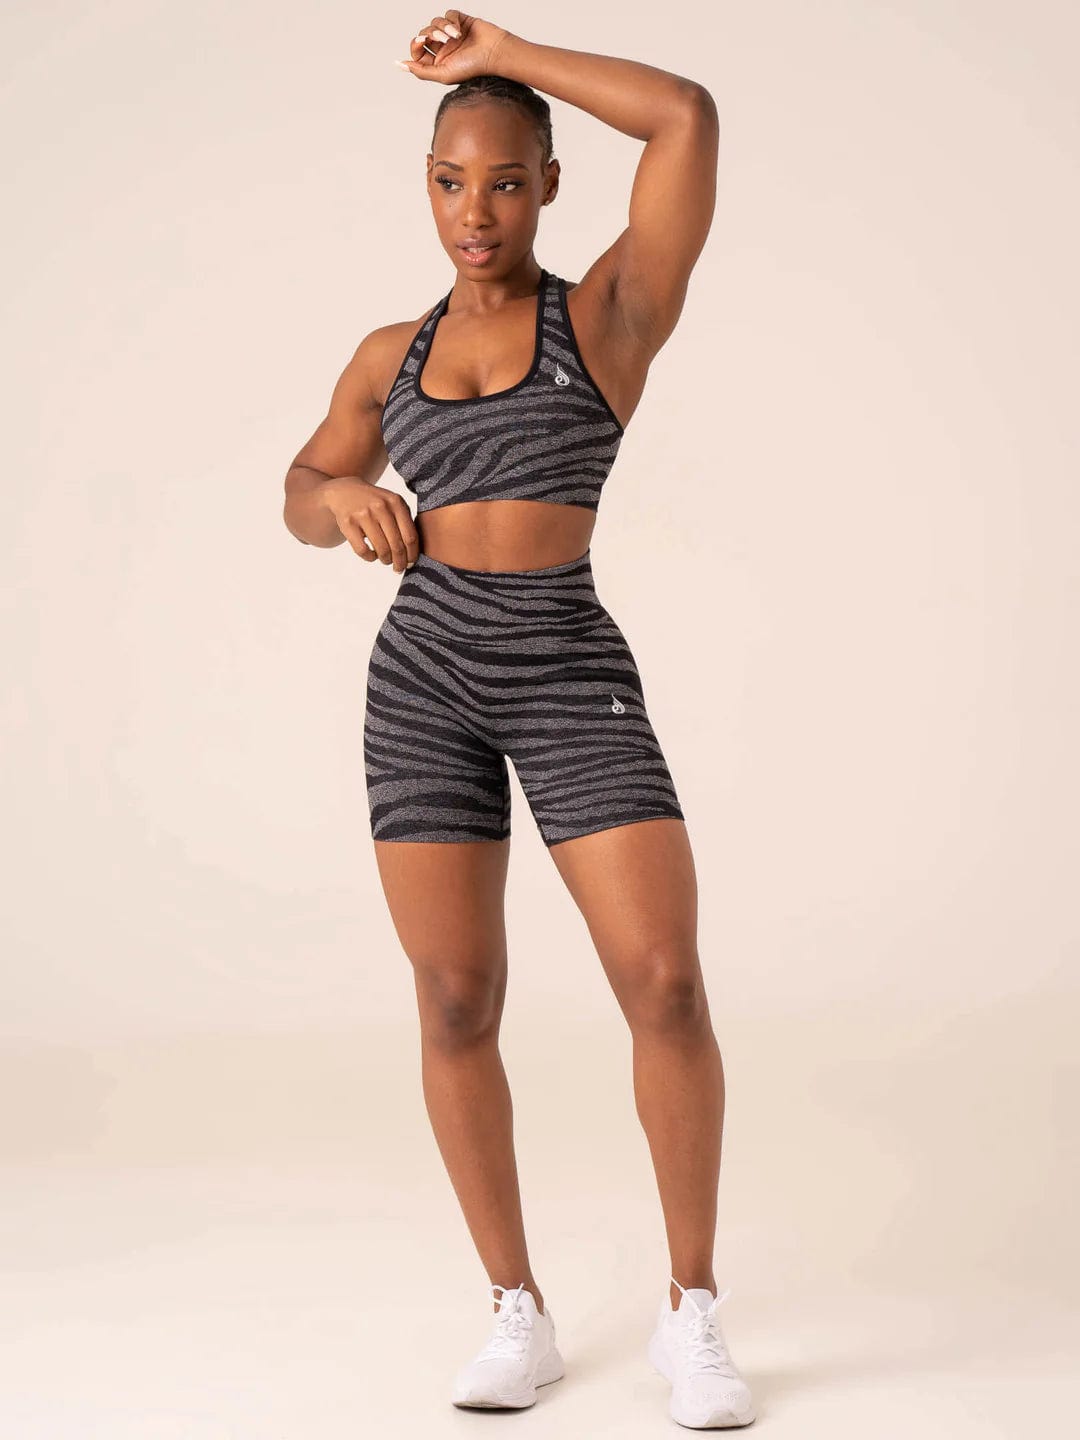 Ryderwear Zebra Seamless Shorts9.95 Bike Shorts